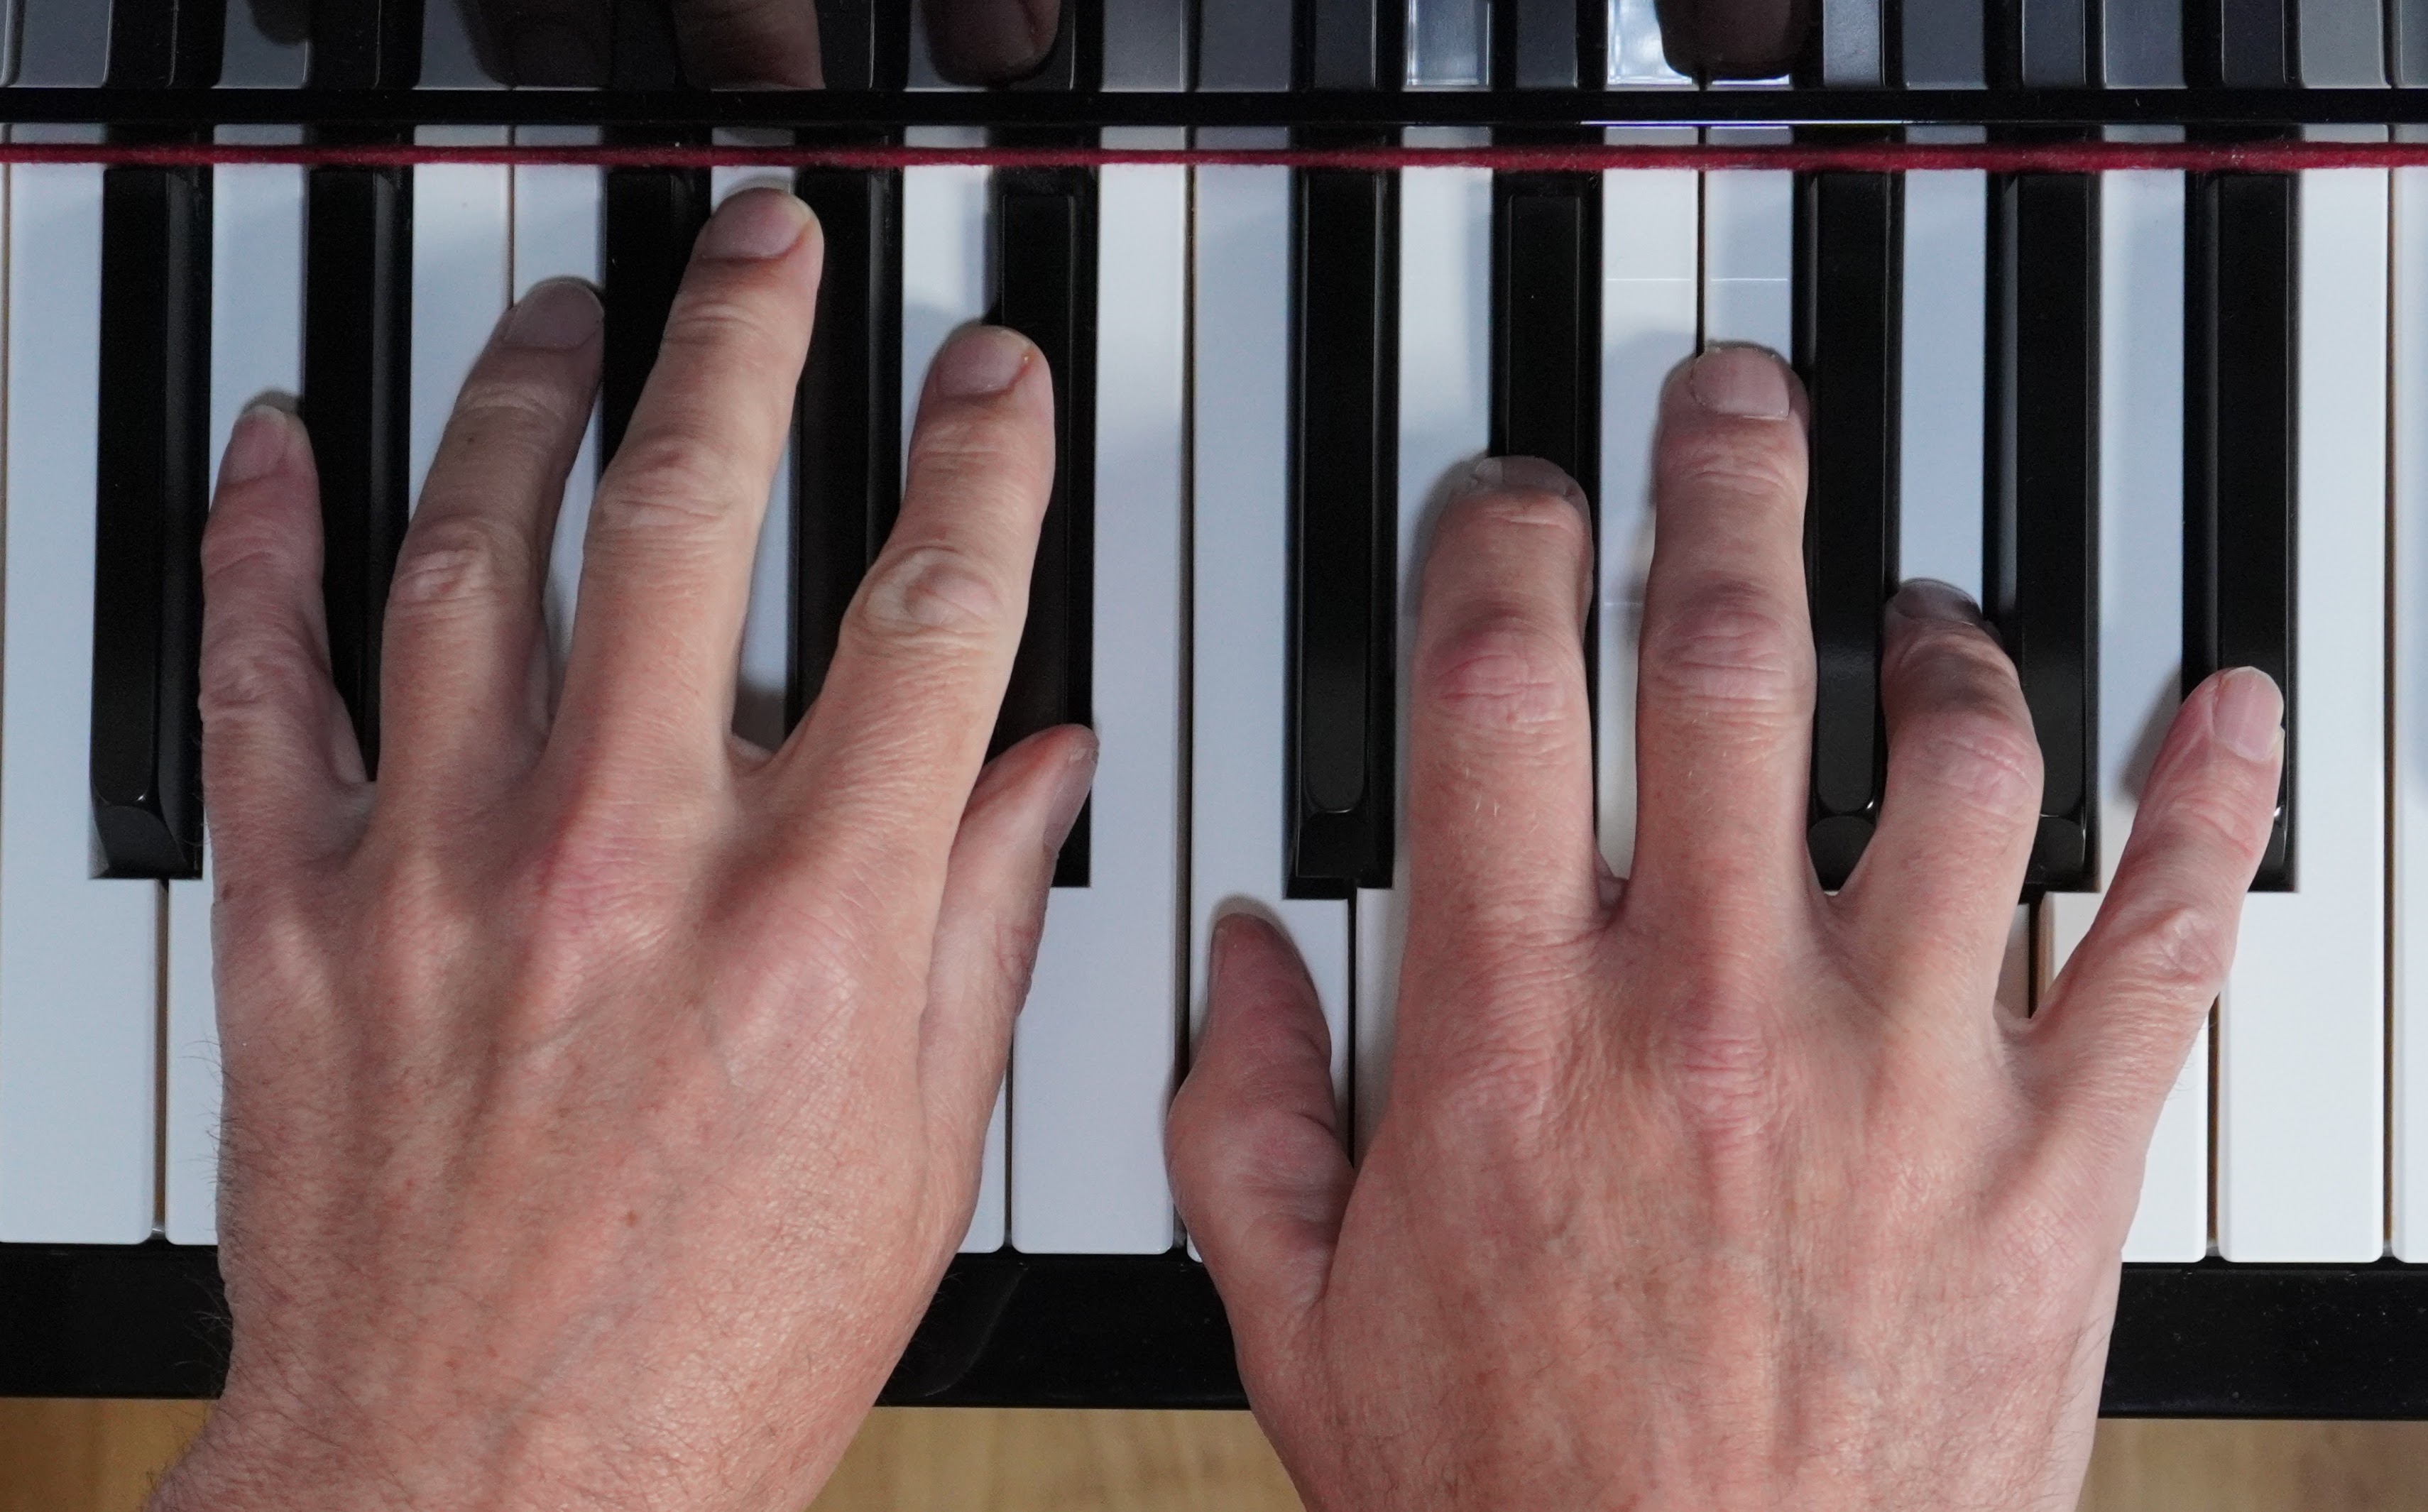 A close up image of Julian Lamberts hands on the piano keyboard